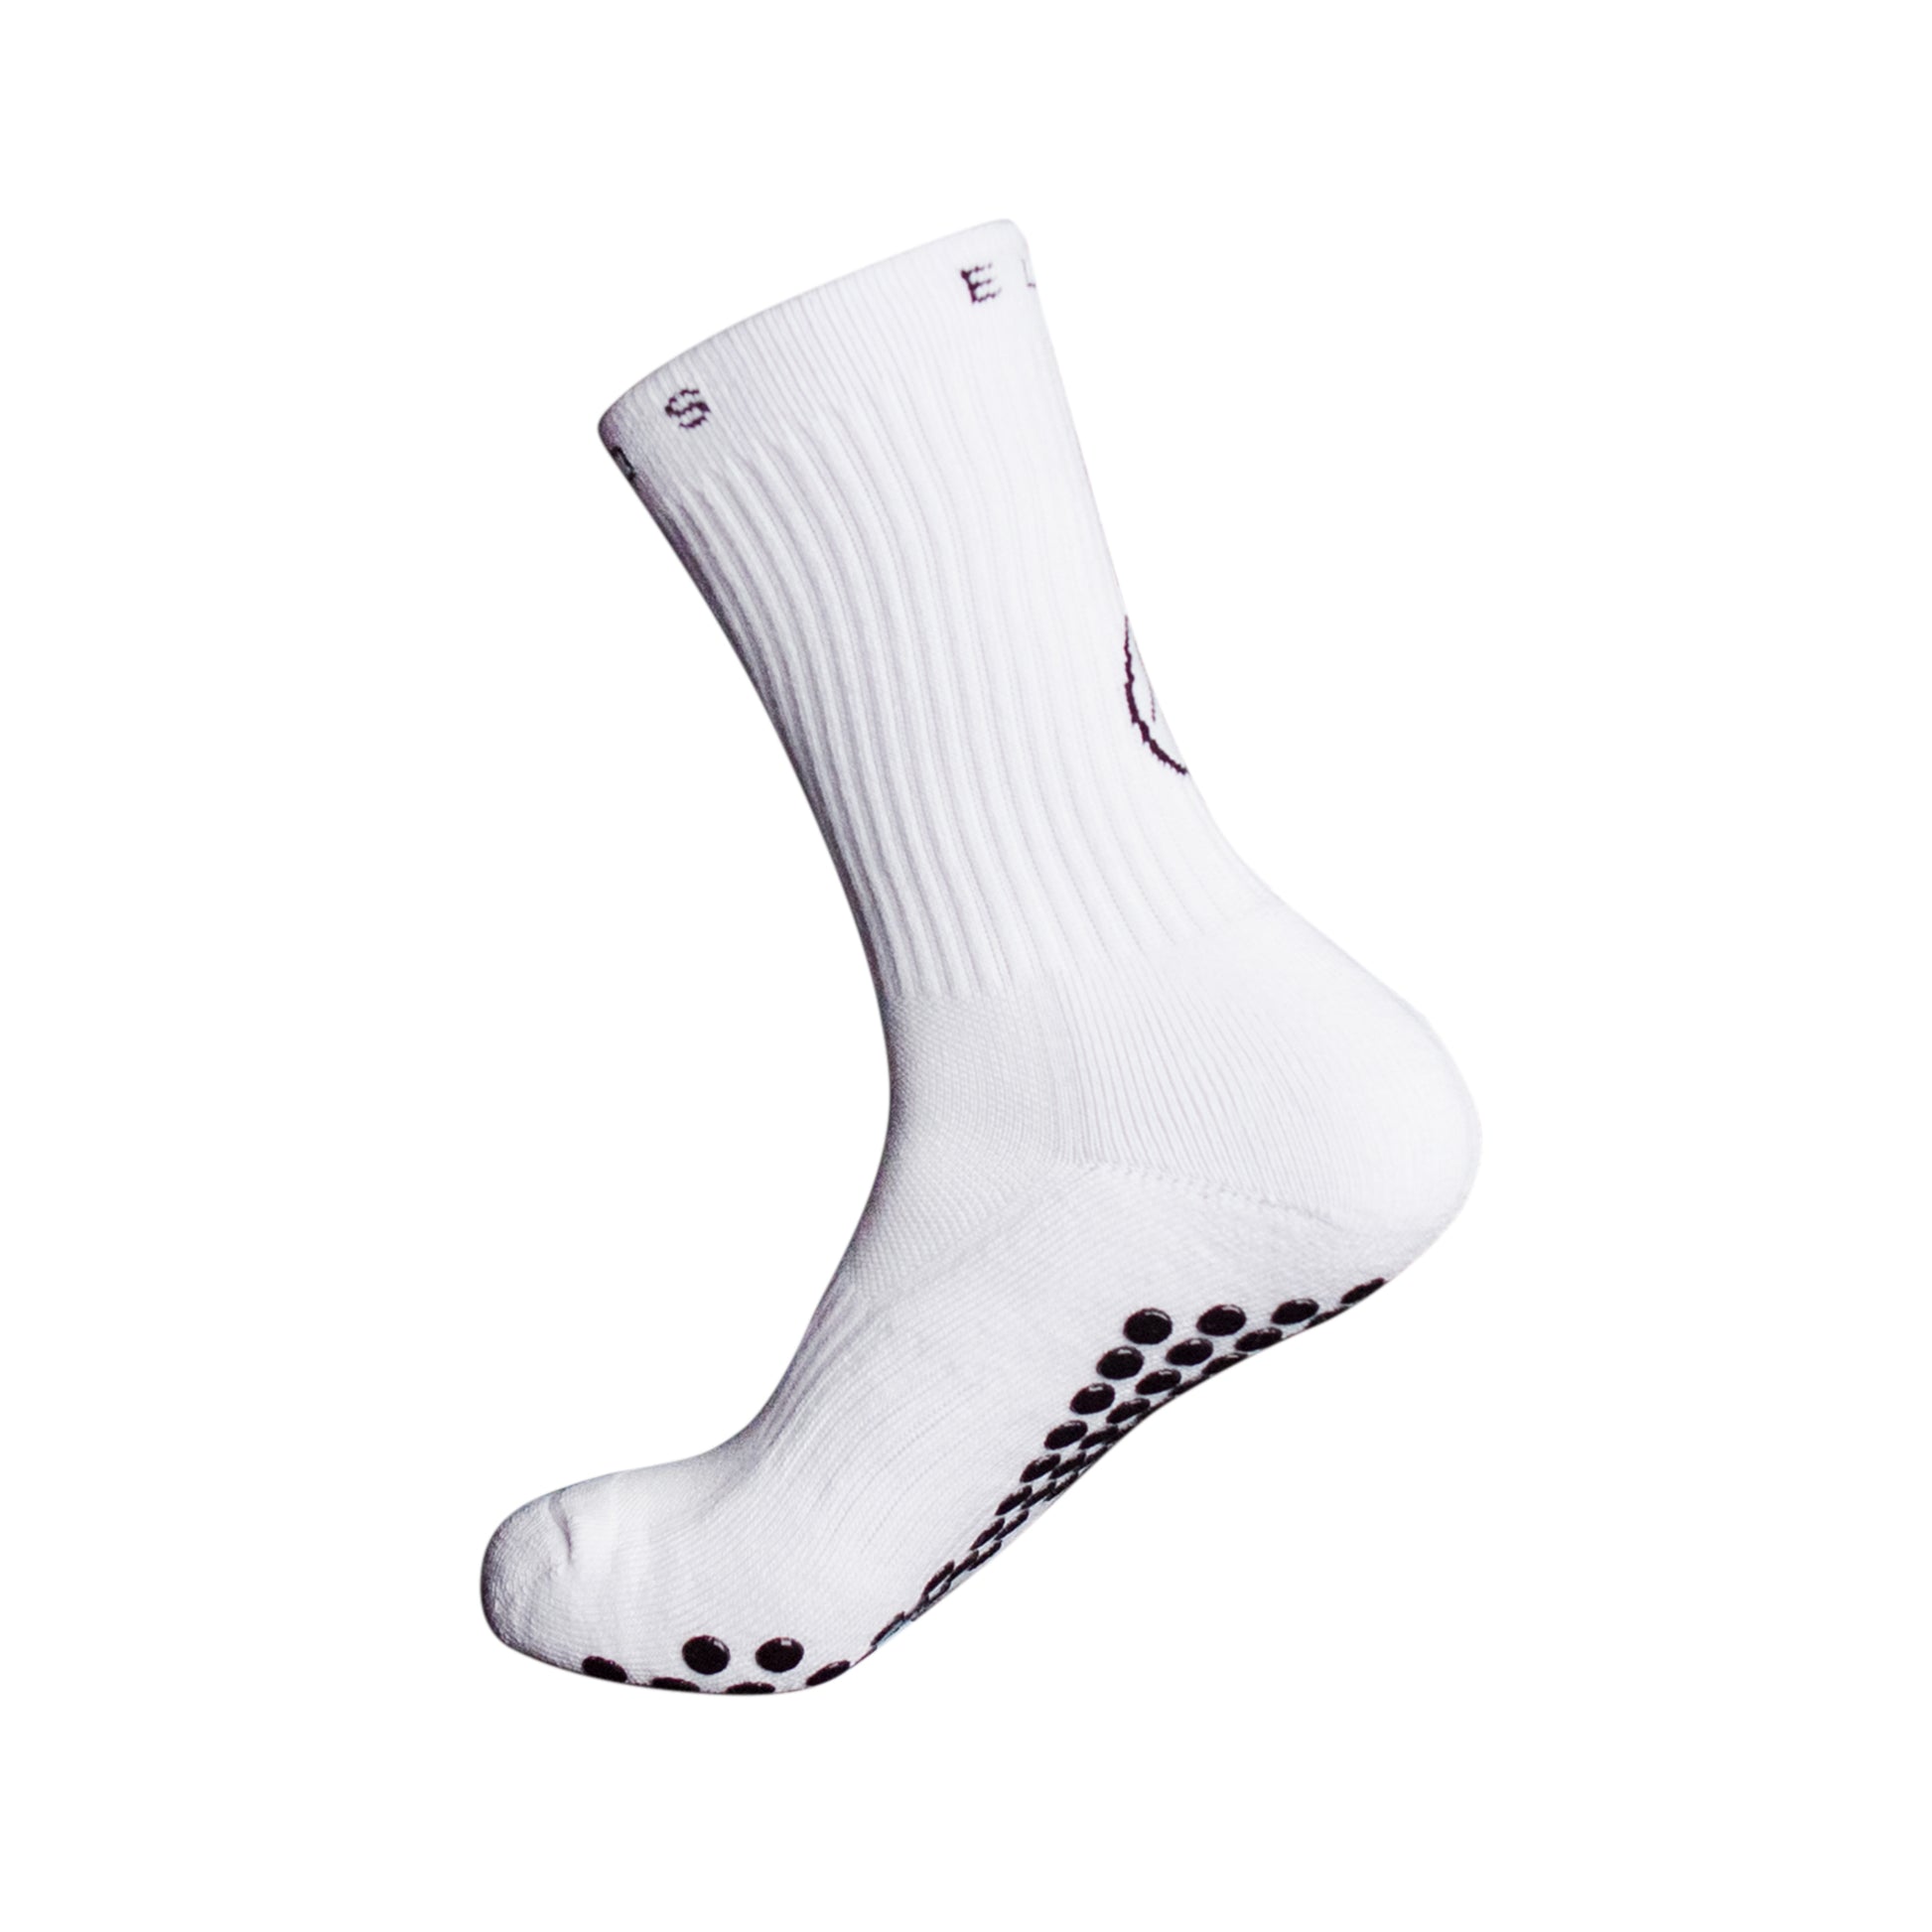 White Eos Grip Socks Ireland